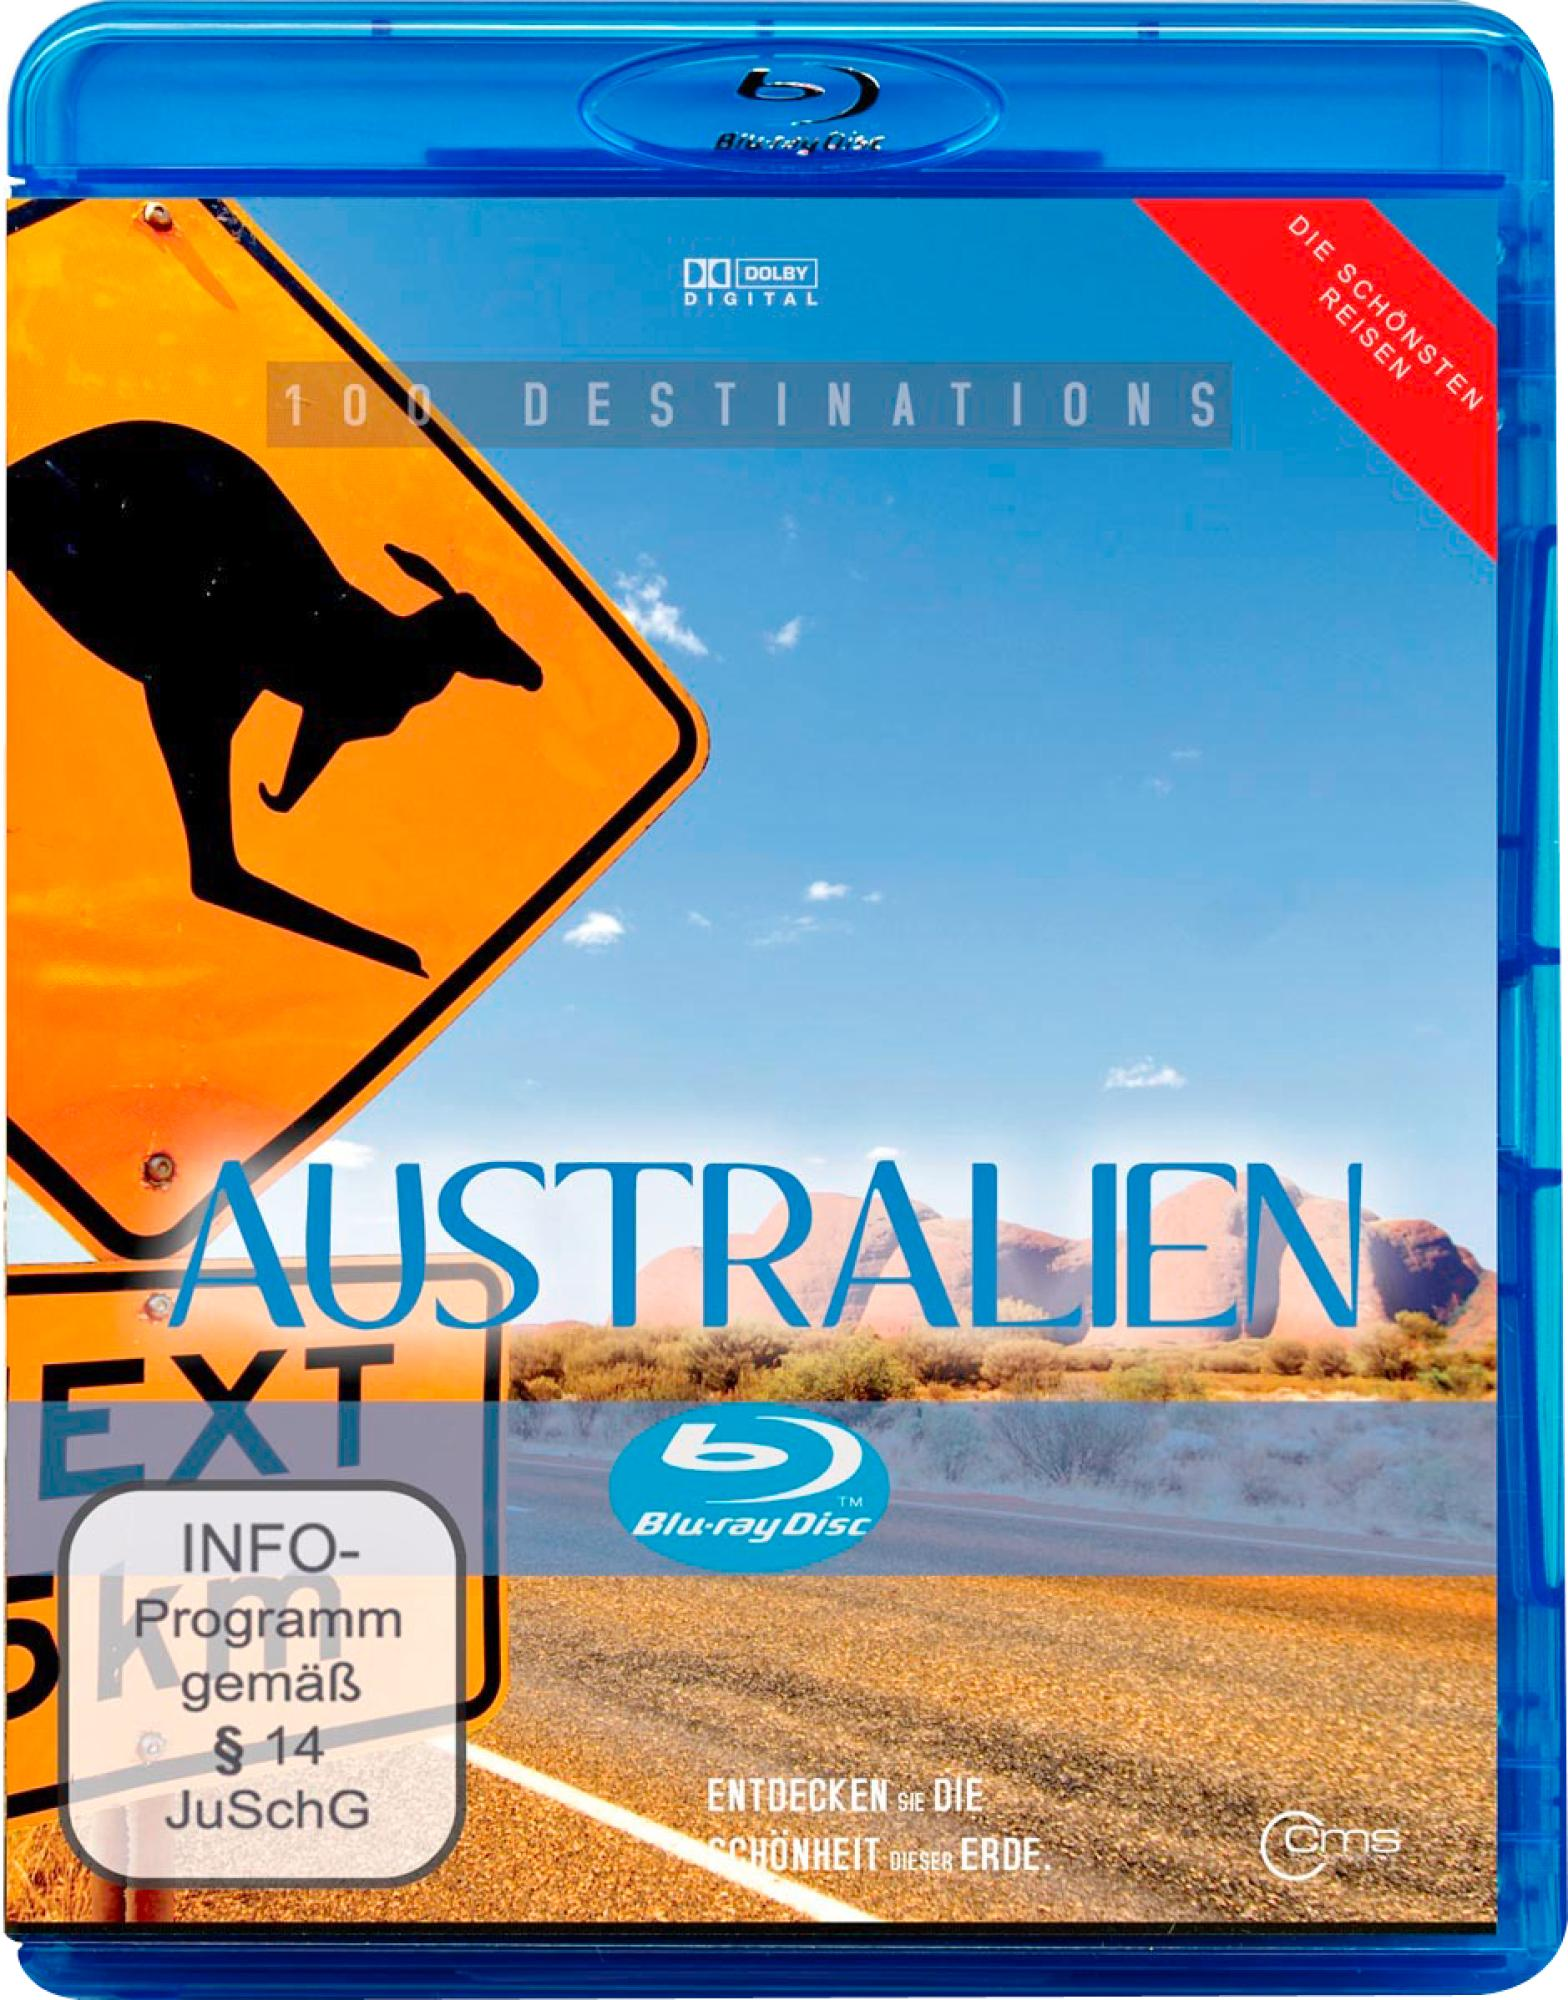 DESTINATIONS - Blu-ray 100 AUSTRALIEN